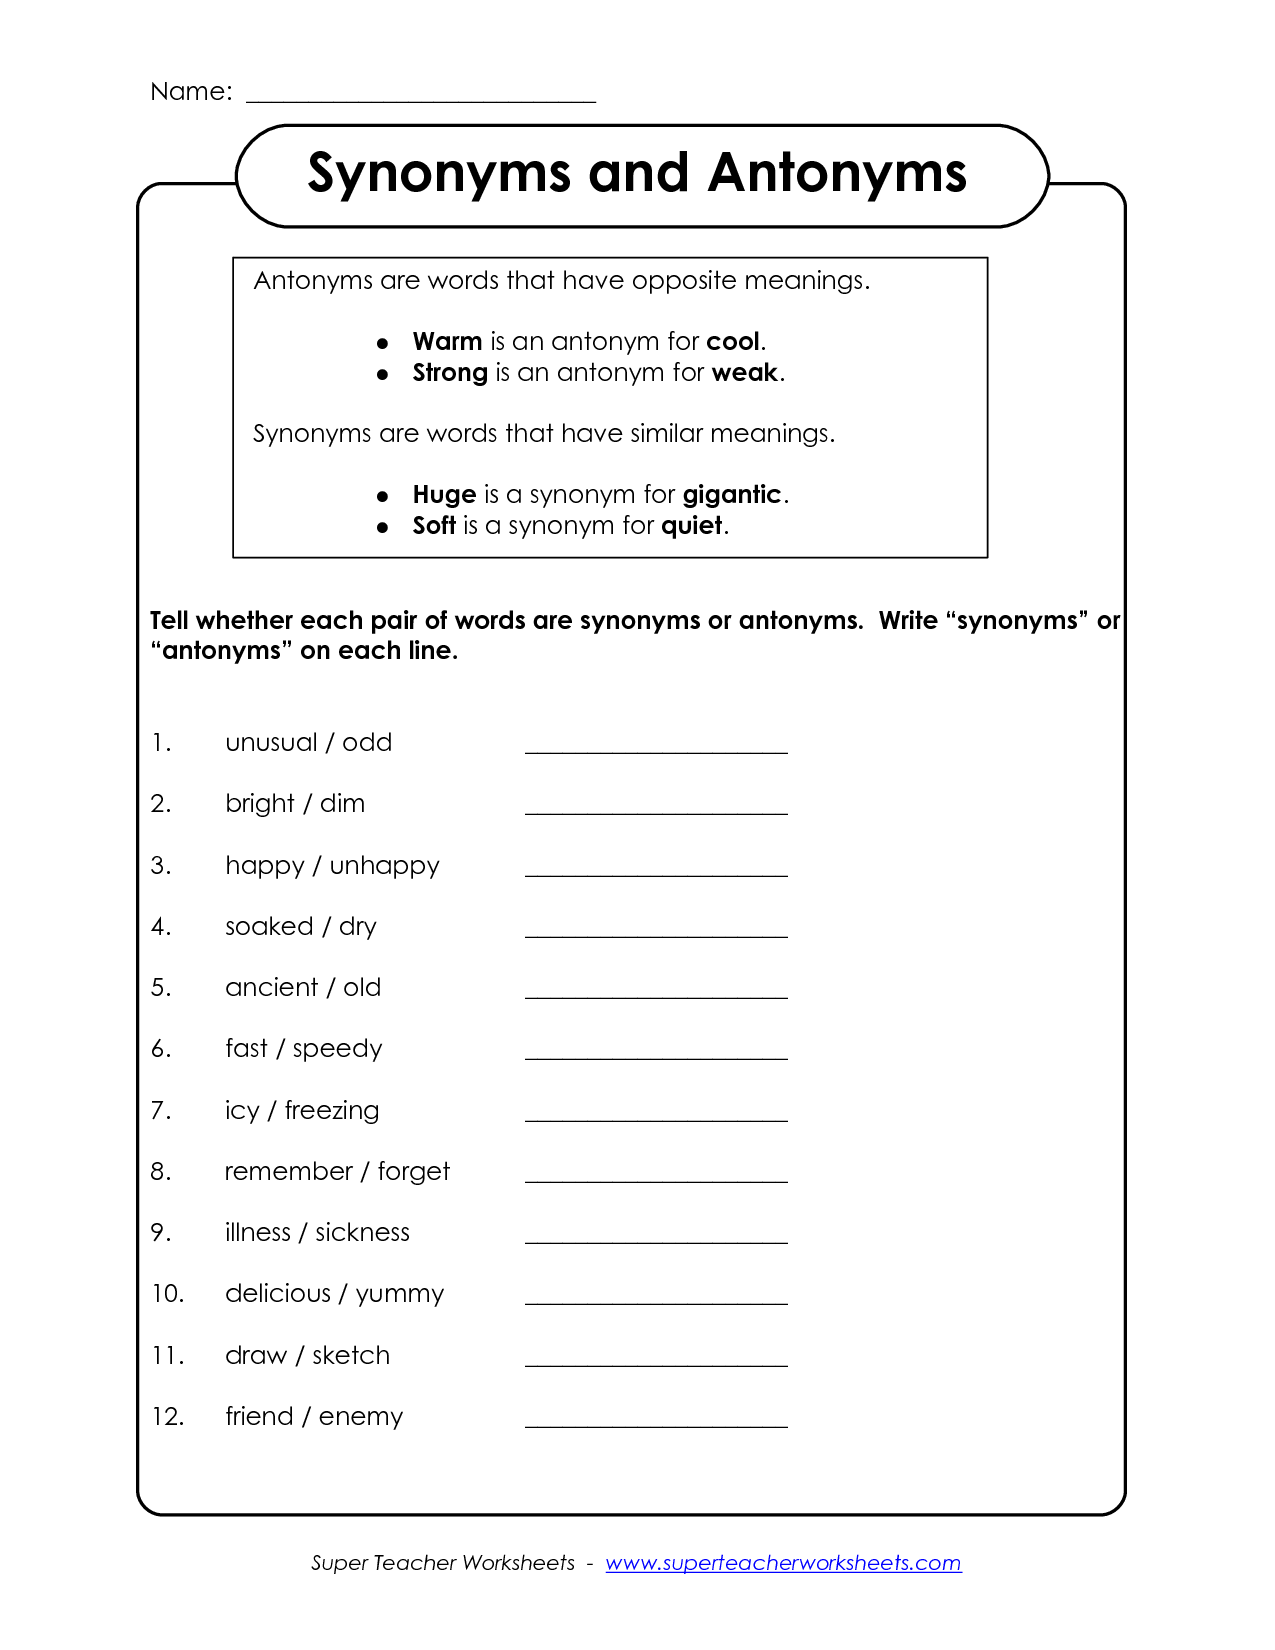 Synonyms And Antonyms Worksheet Free Printable